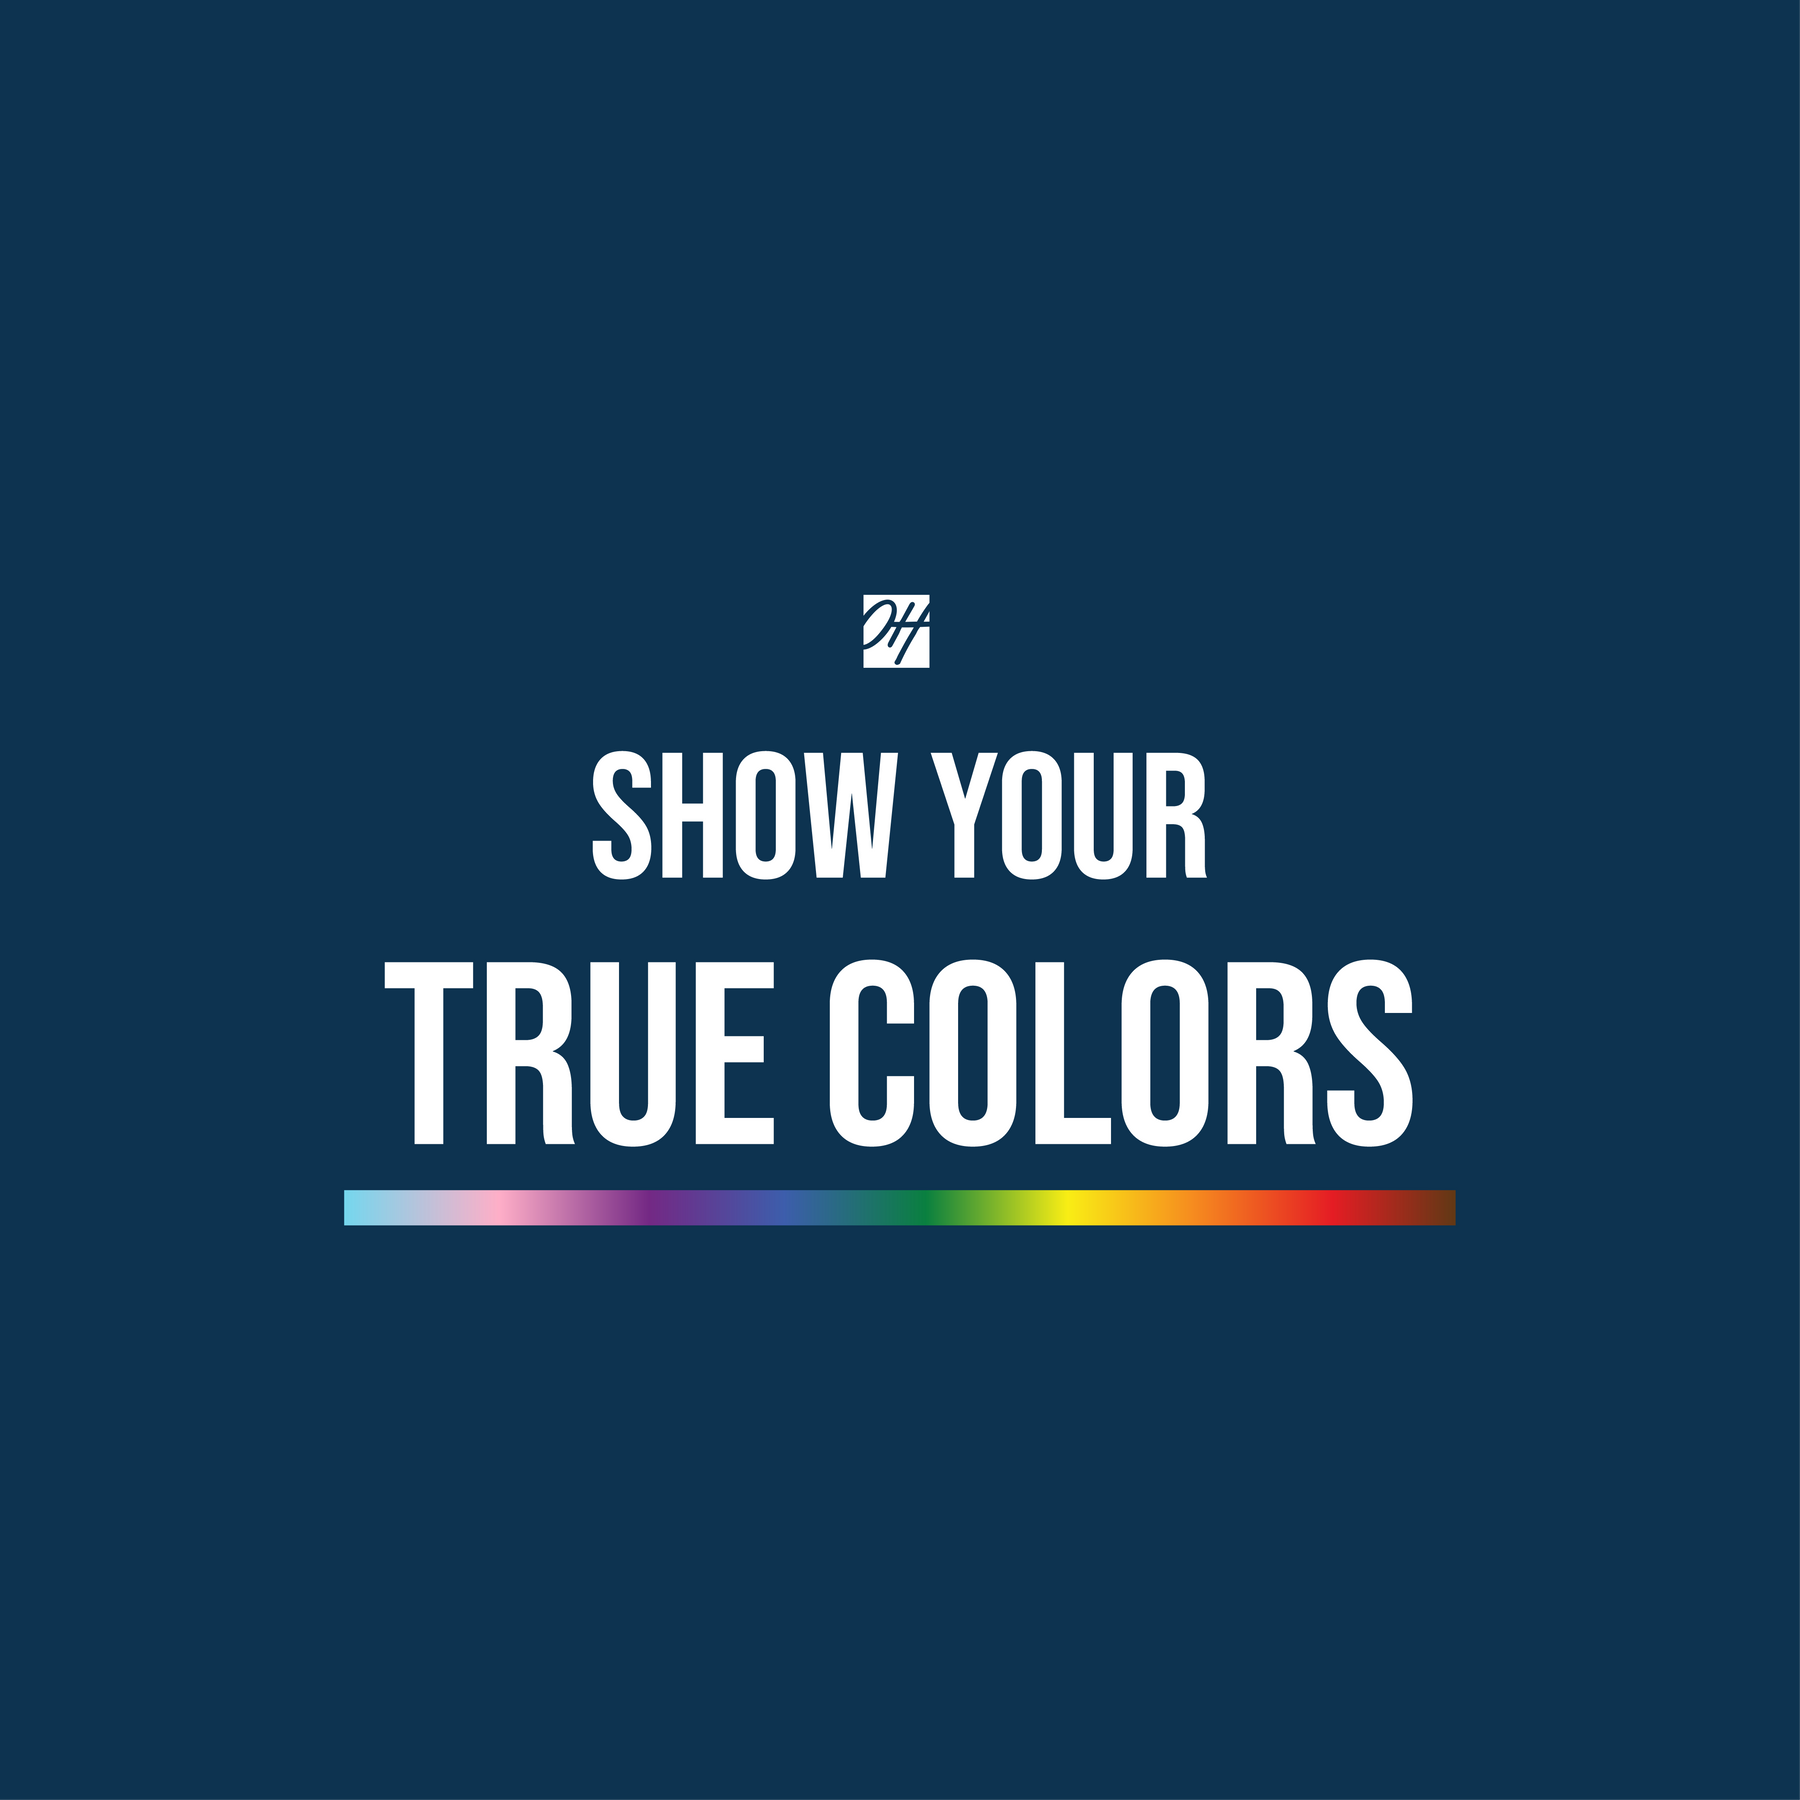 Show your true colors by Pixel-ArtUnicorn on DeviantArt